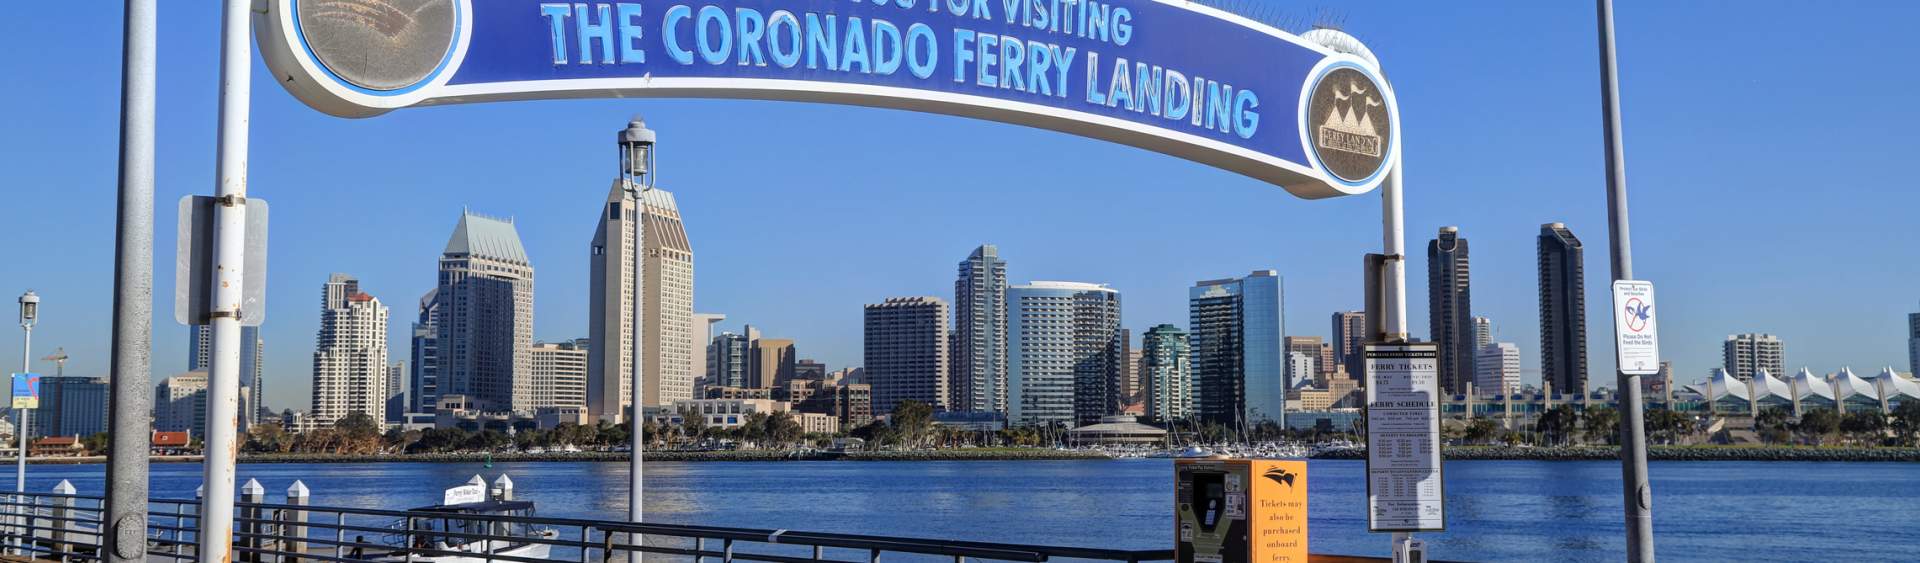 Live Webcam Flagship Cruise, Coronado Ferry Landing, San Diego Bay